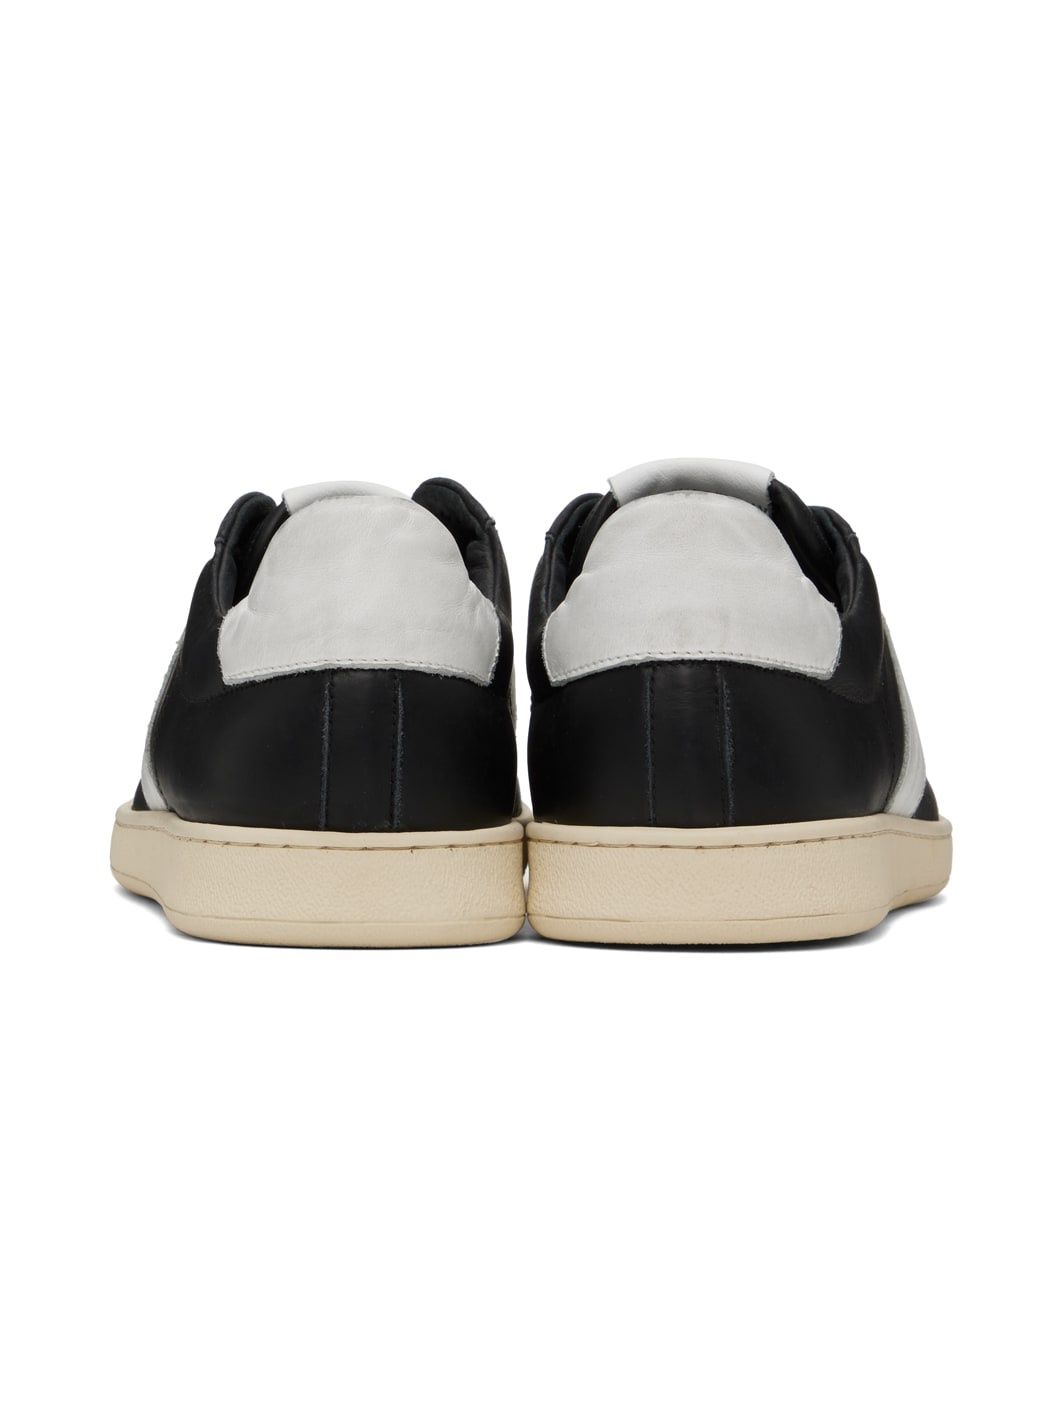 Black & White Court Sneakers - 2